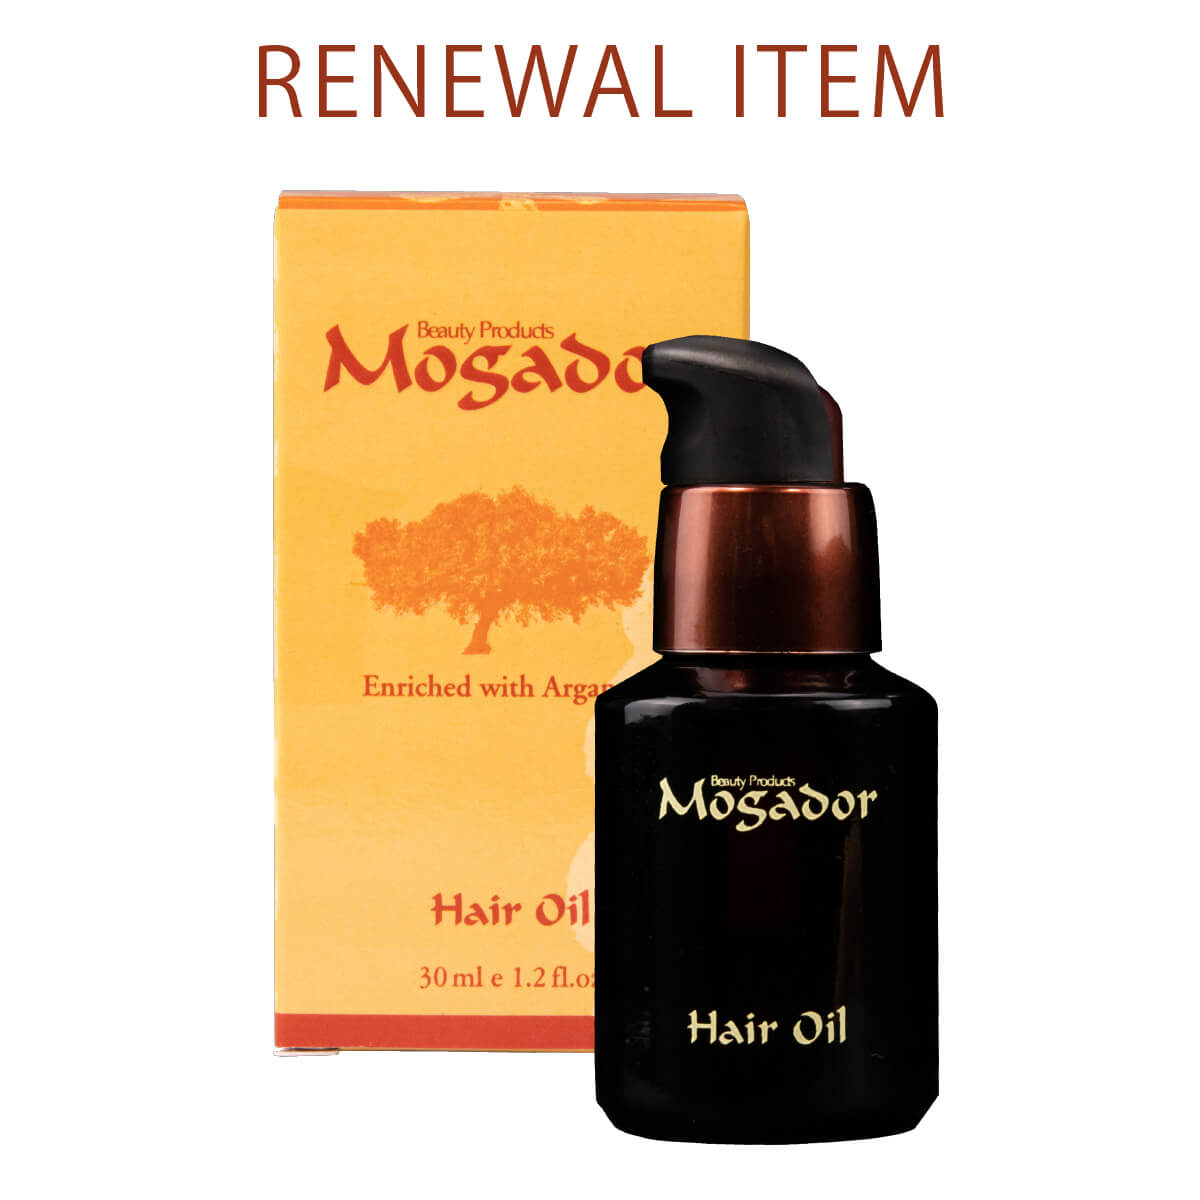 RENEWAL Mogador HAIR Oil 30ml|JAS Organic Complex ™|日本限定 新し香りにリニューアル